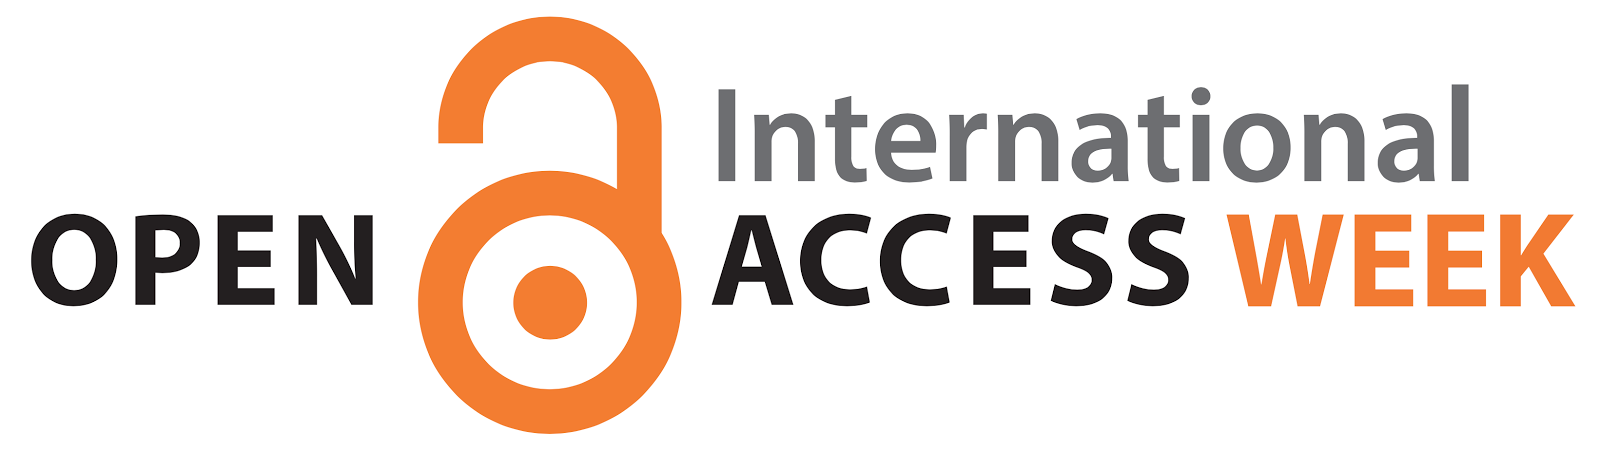 Open int. Open access. Open access logo. Открытый доступ. Access is open.